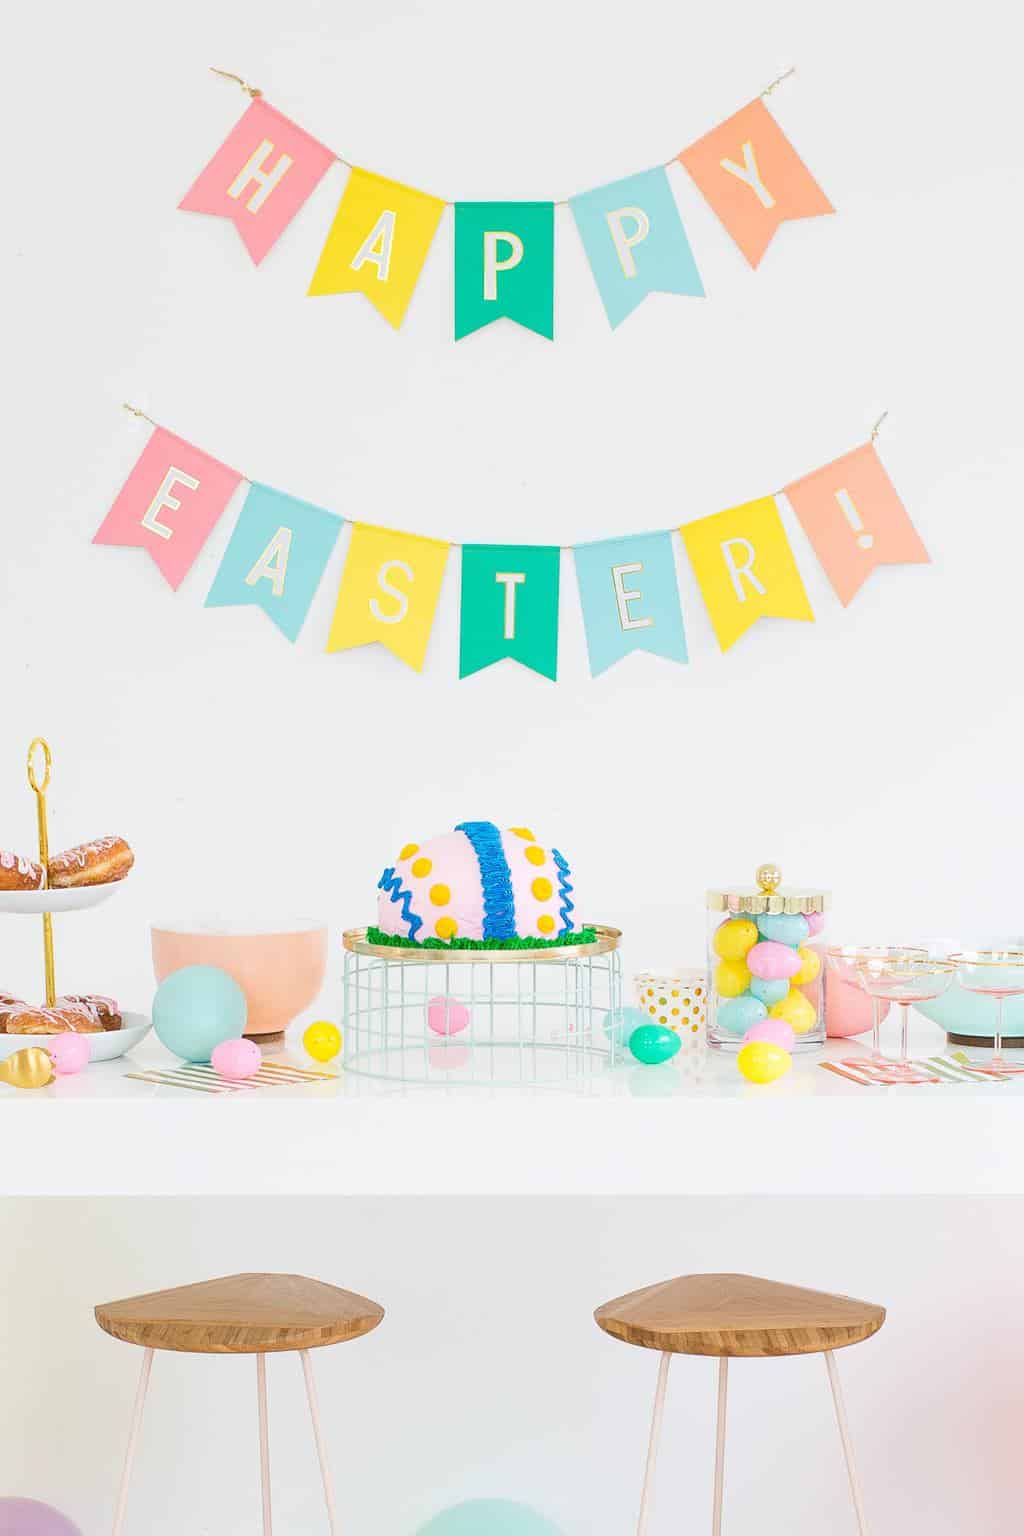 A Last Minute Playful Easter Dessert Table Idea